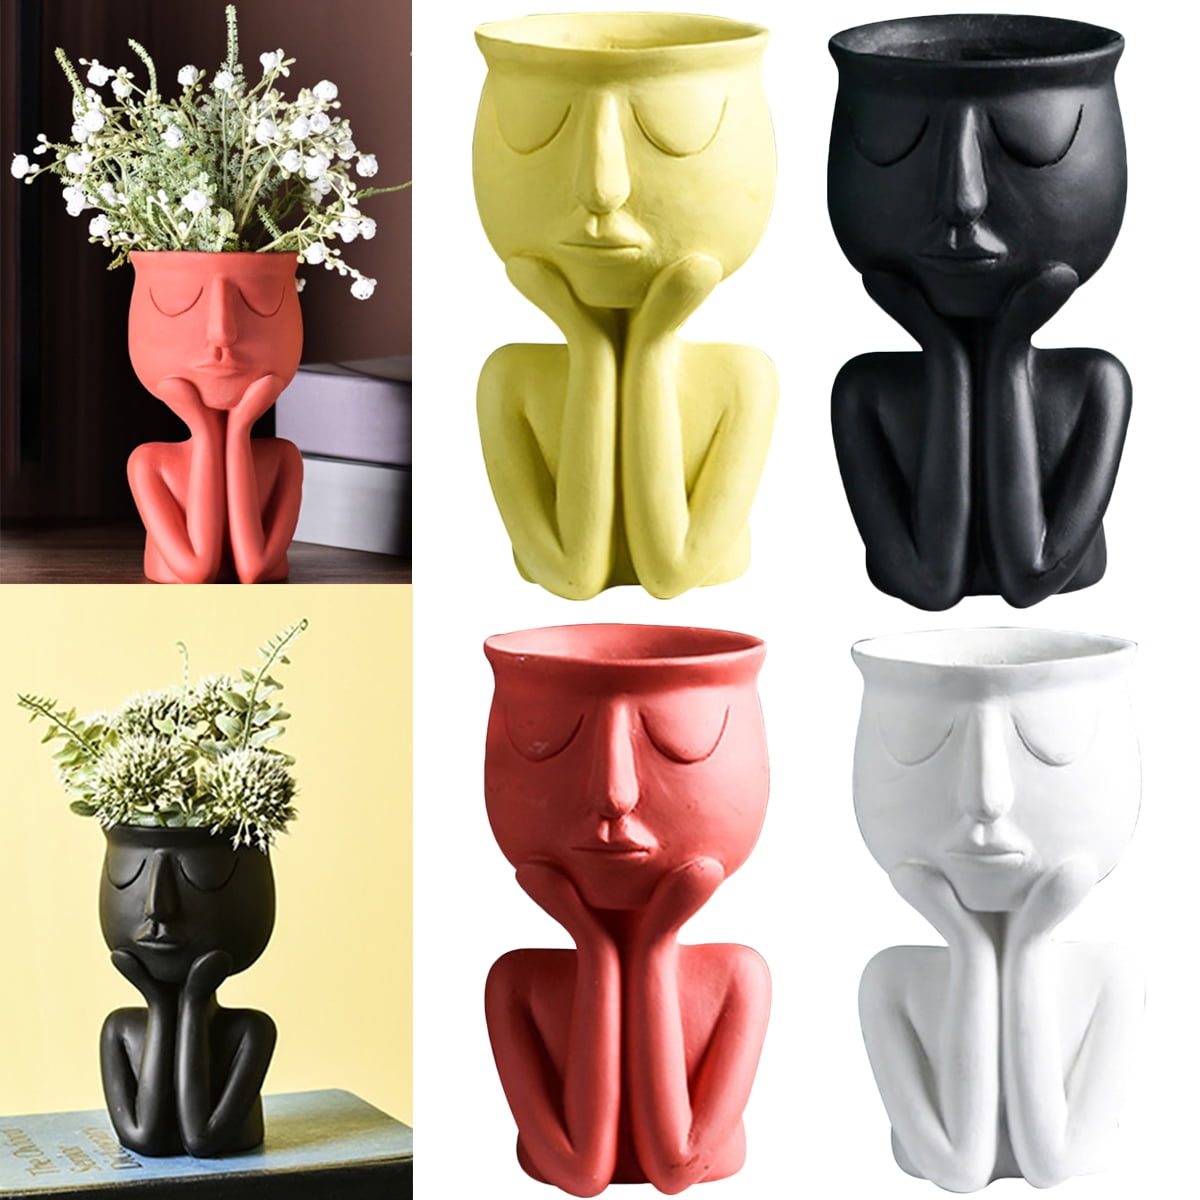 3" Tabletop Human Head Face Sculpture Flower Pot Indoor Planter Container Black 